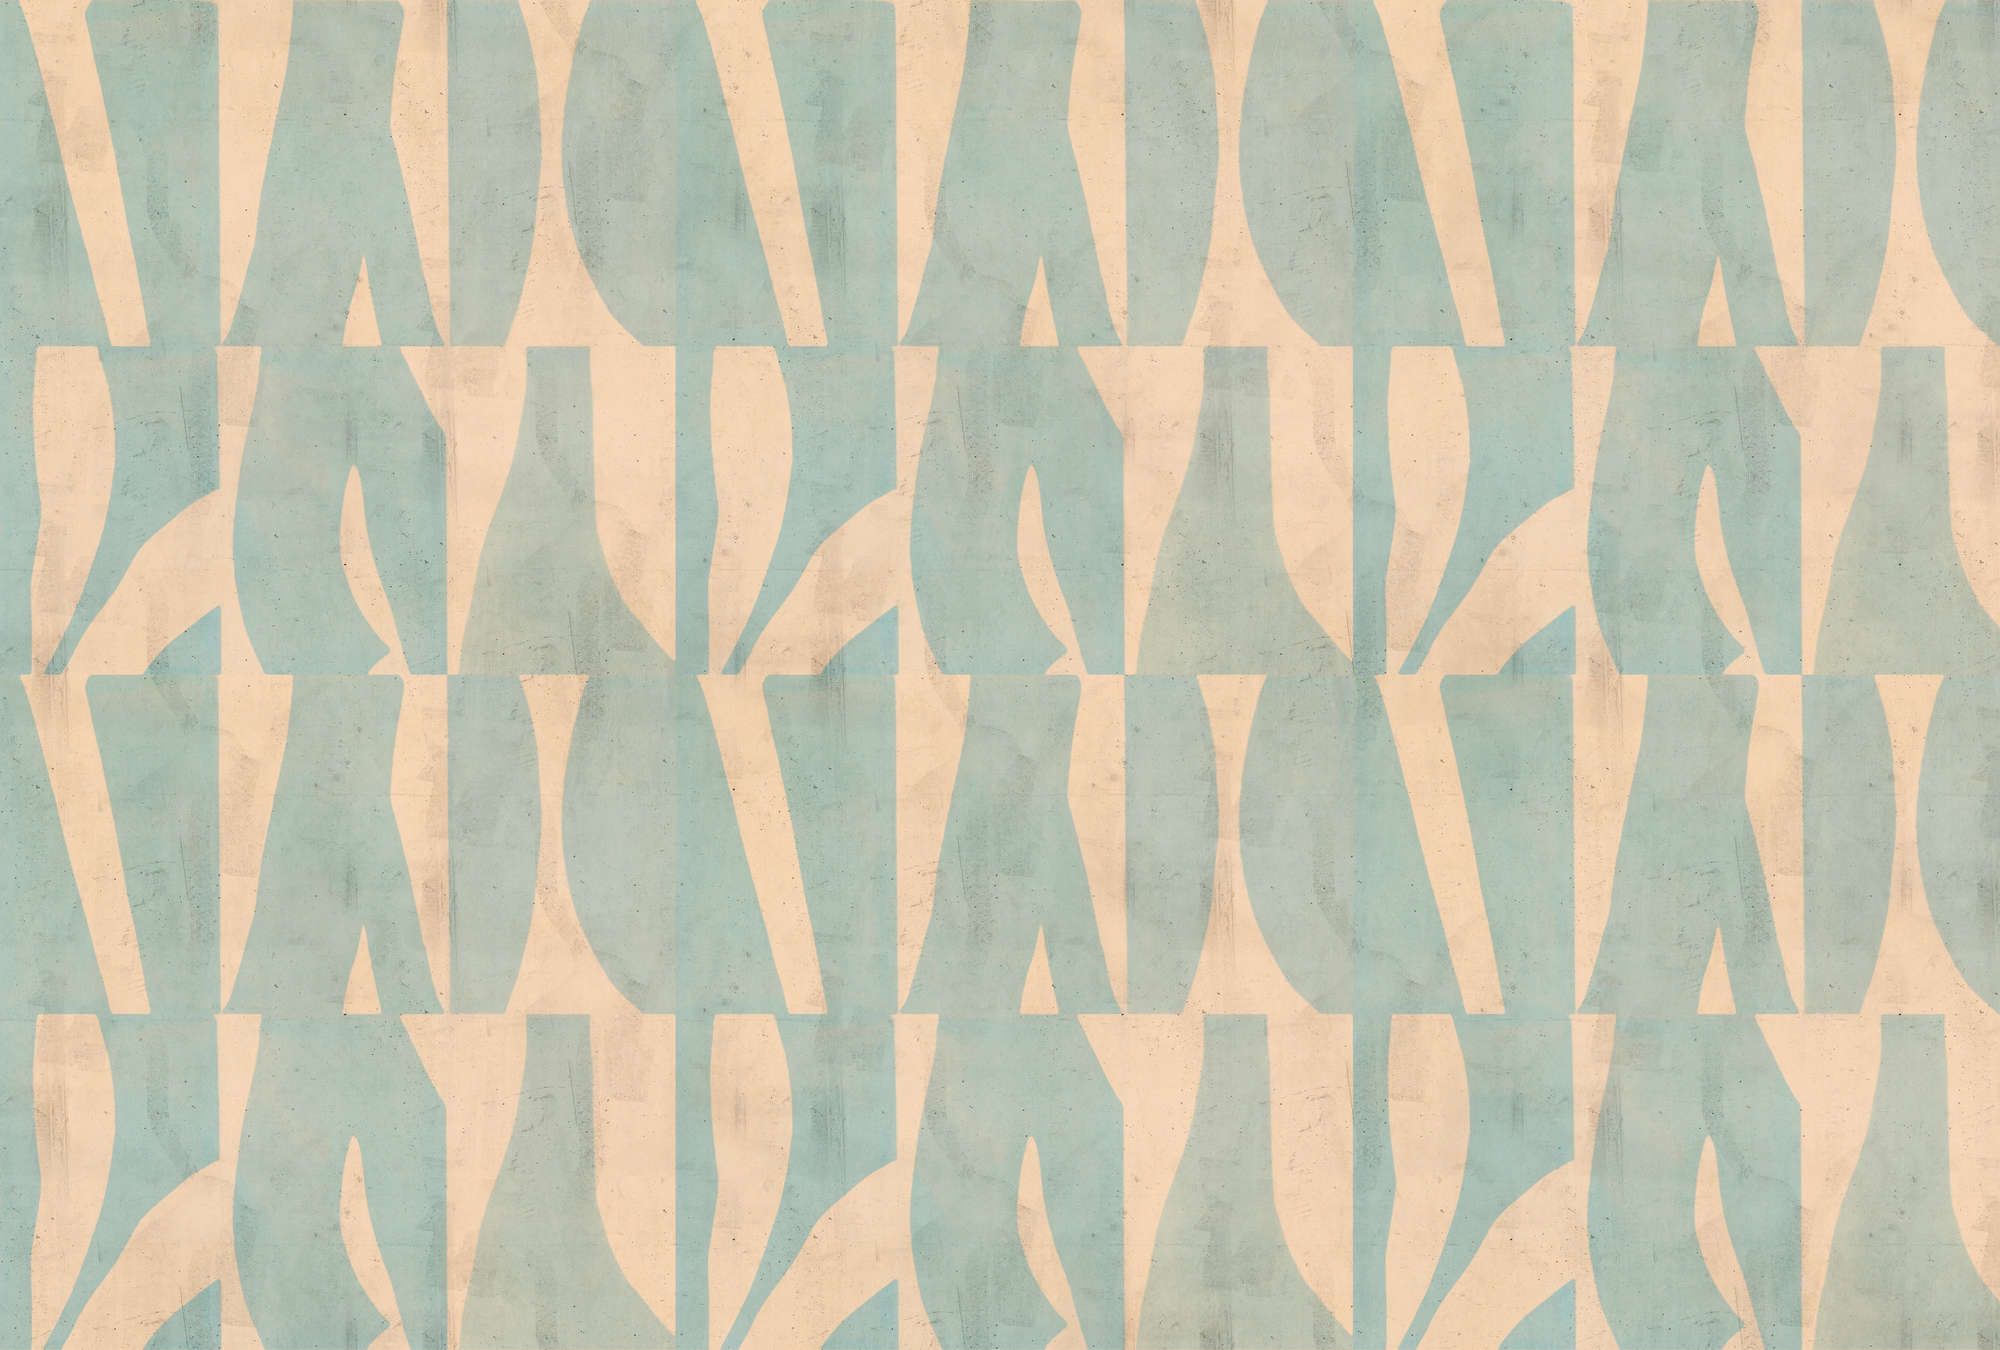             Fotomural »laila« - Motivo gráfico sobre textura de enlucido de hormigón - Beige, verde menta | Material no tejido de textura ligera
        